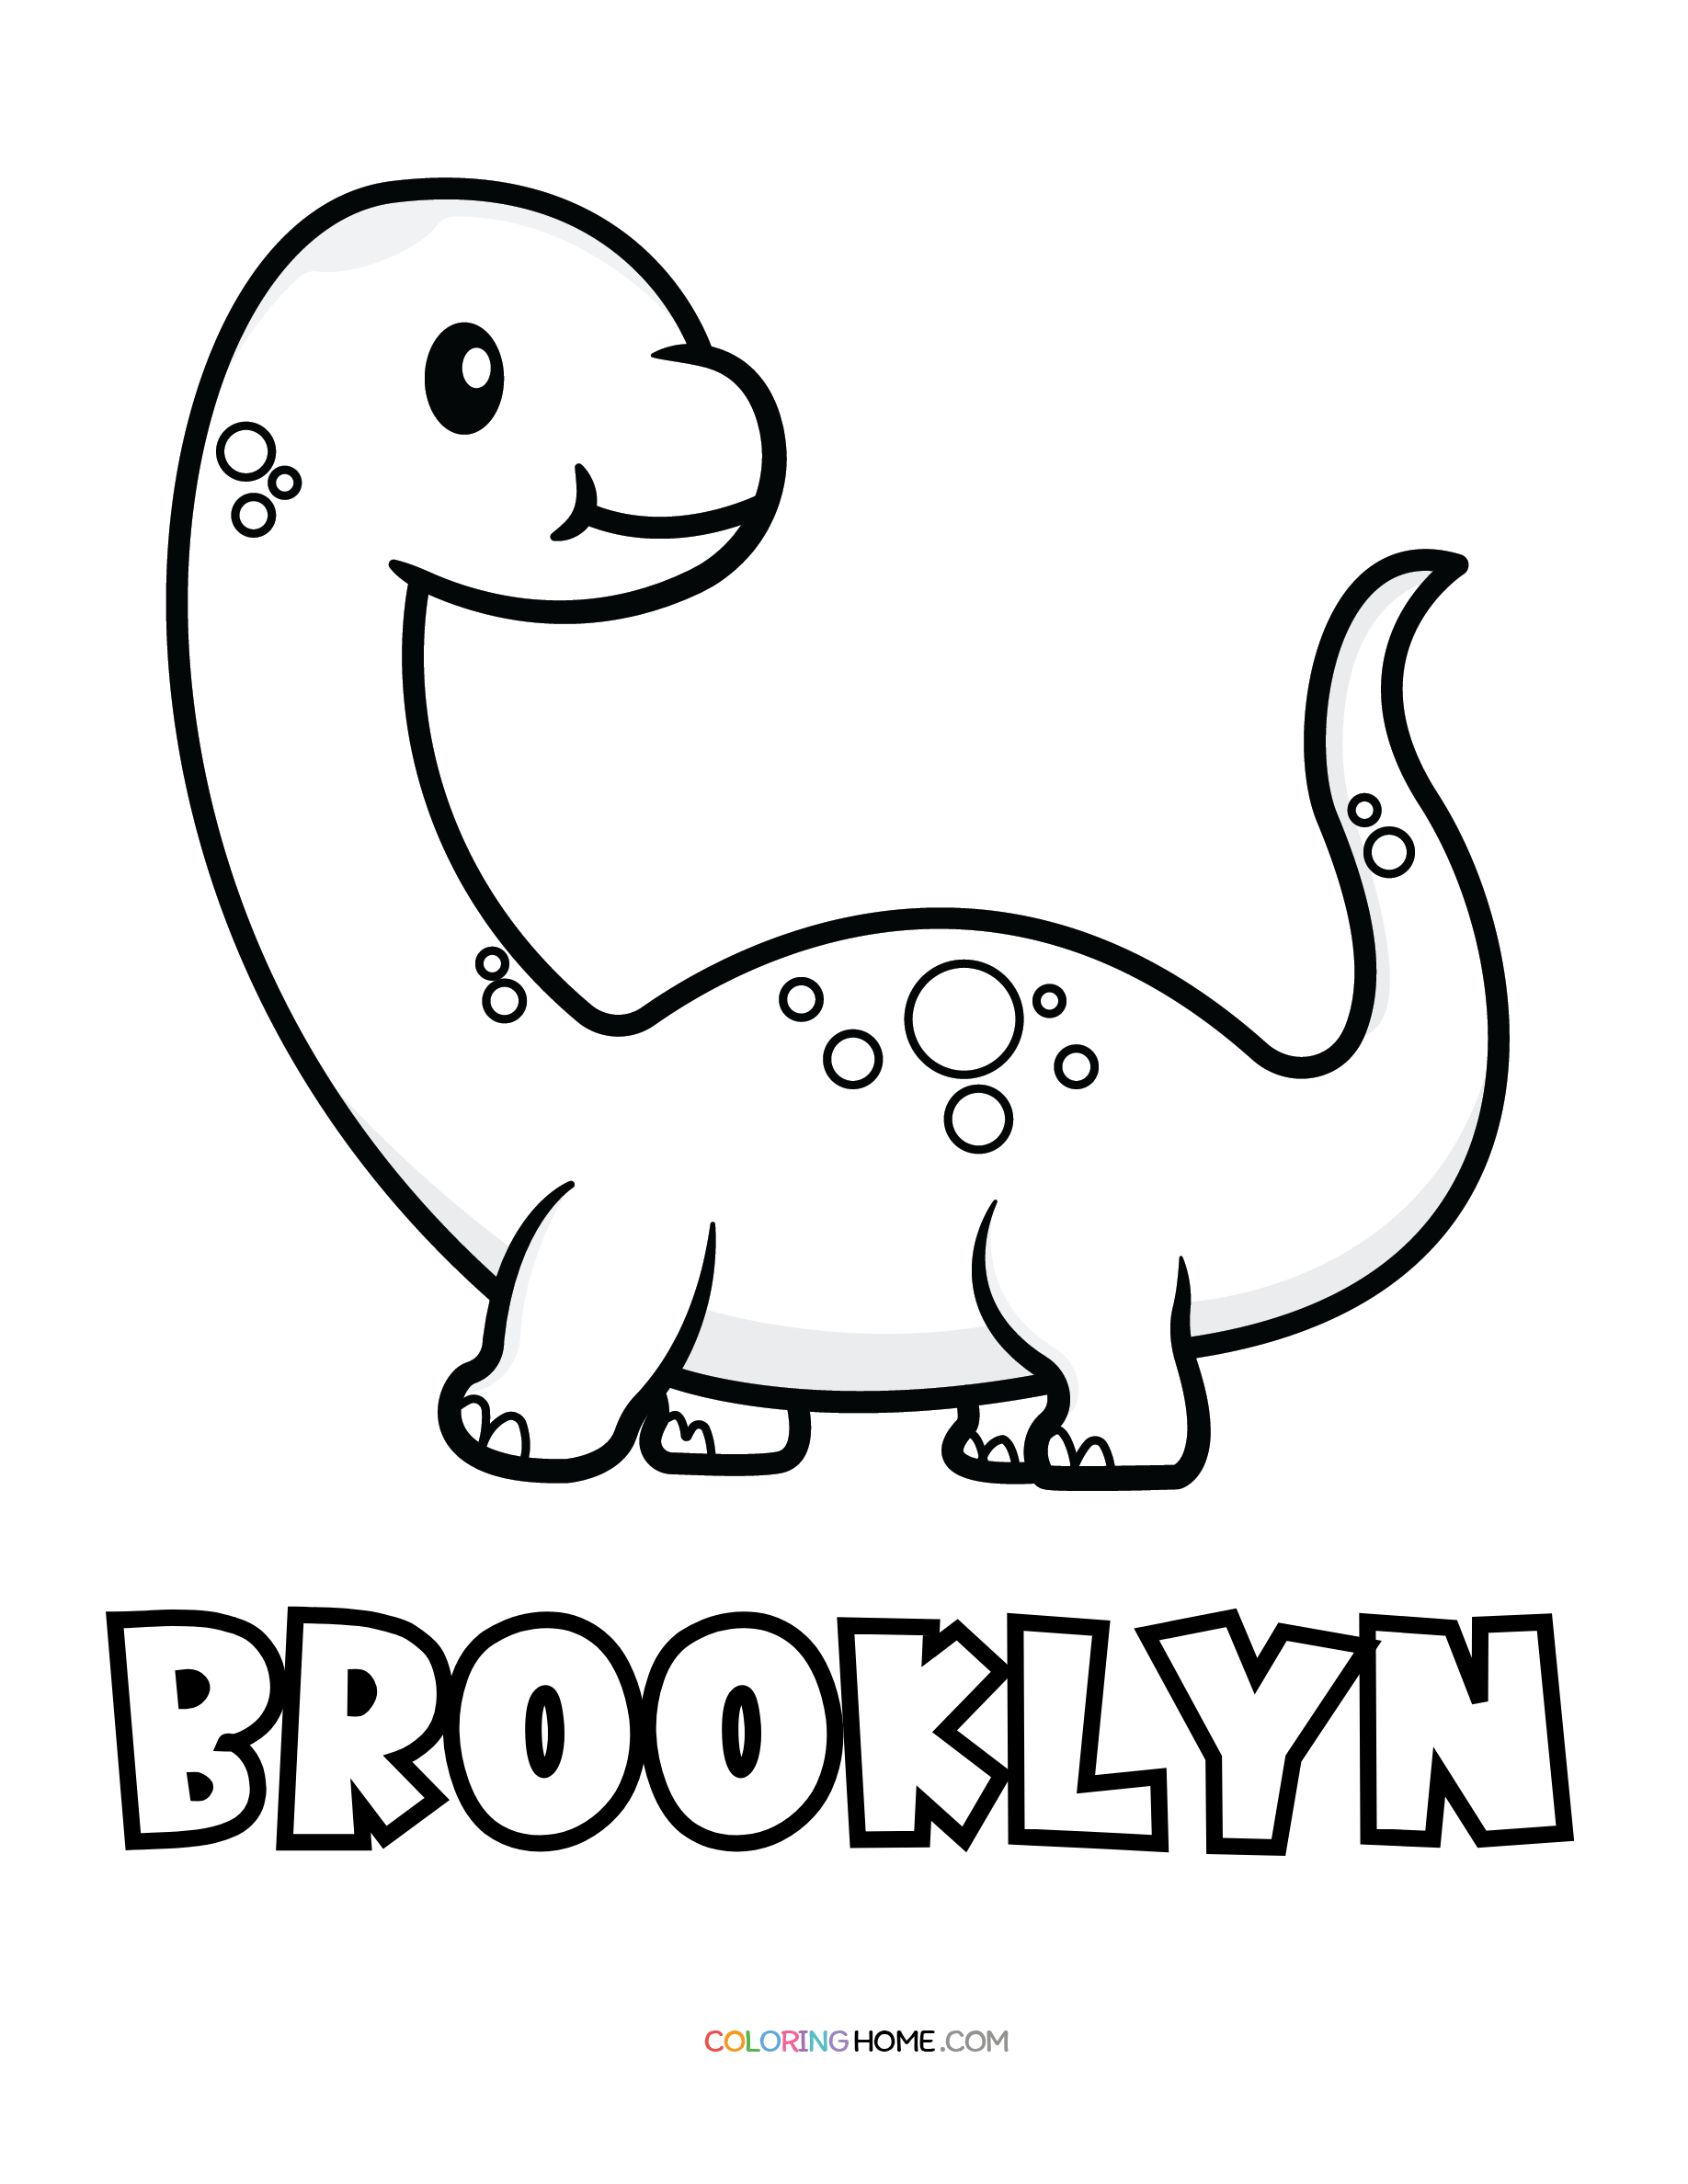 Brooklyn dinosaur coloring page